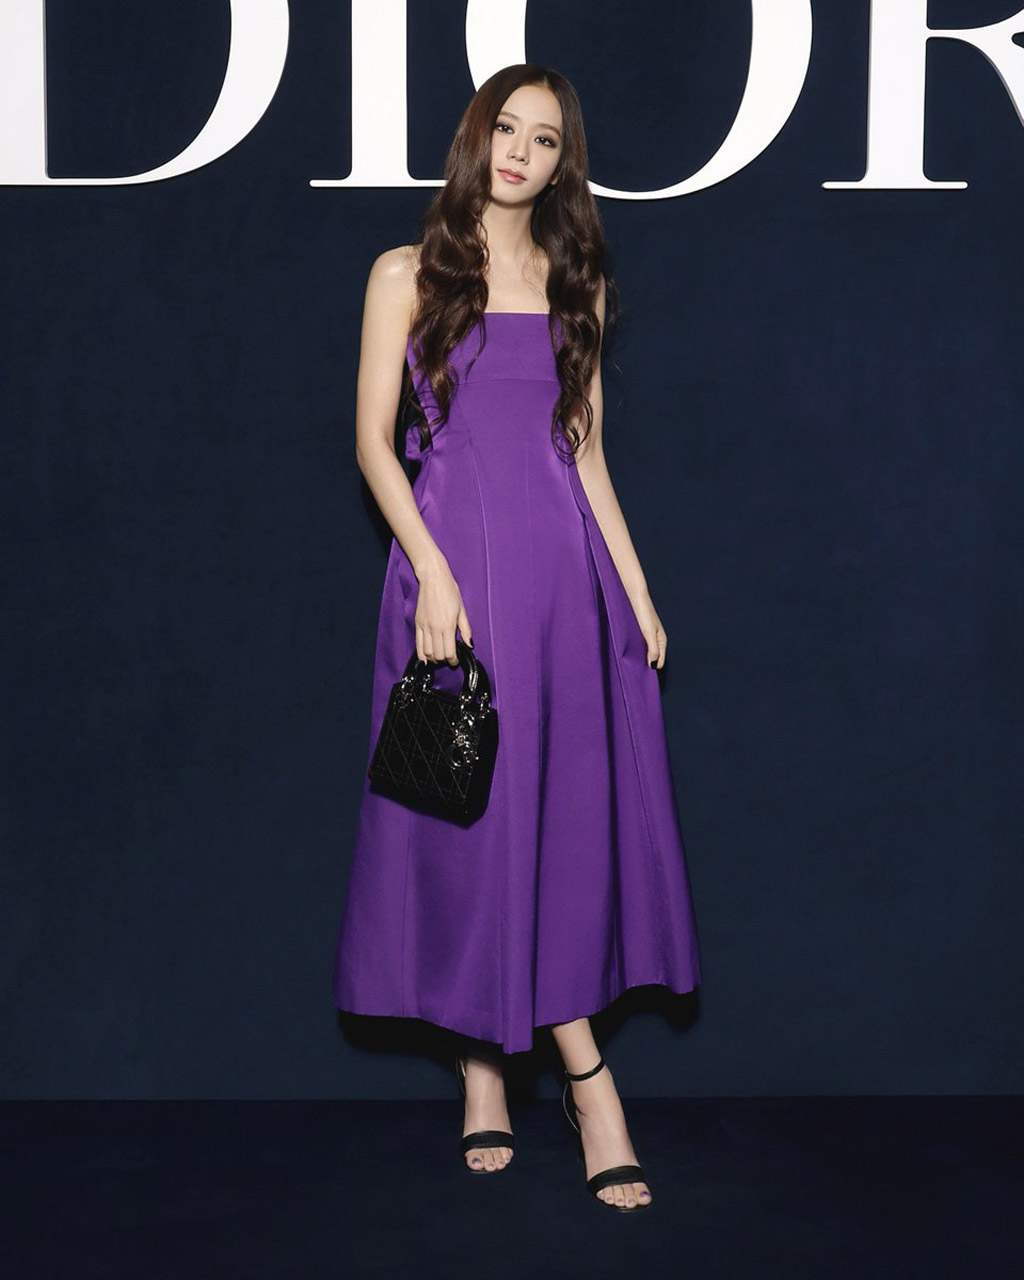 Dior CEO Pietro Beccari on taking digital risks  Vogue Business